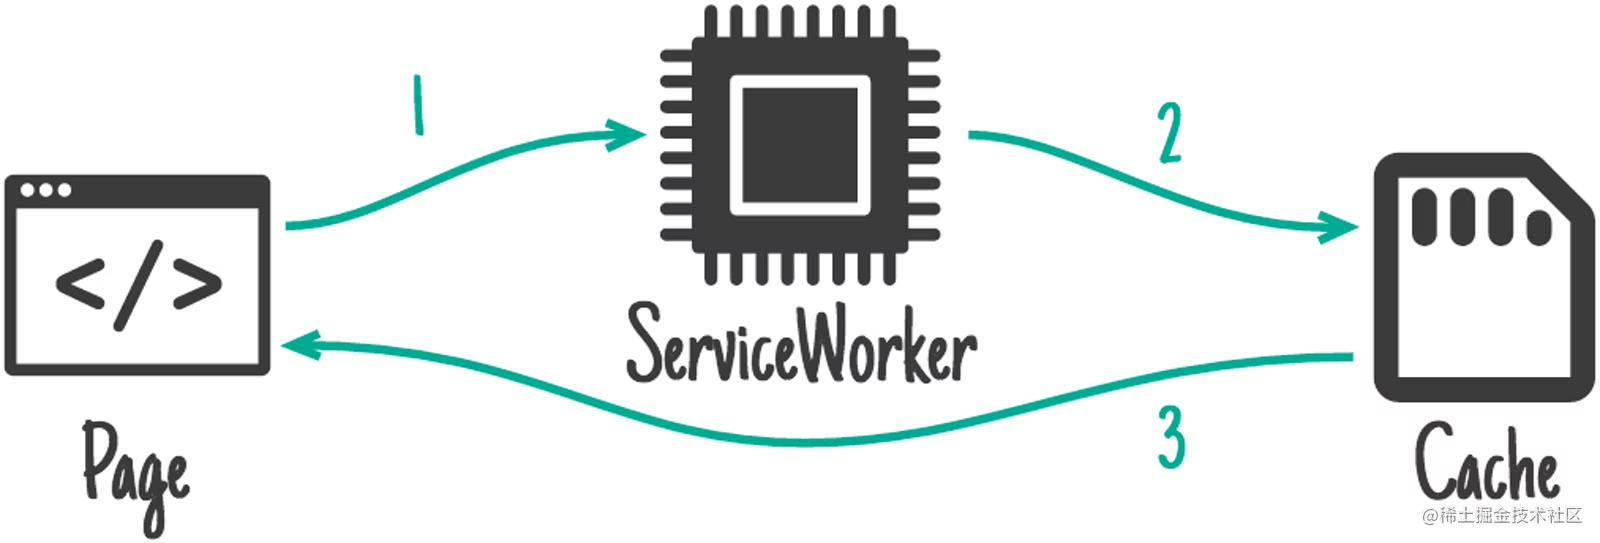 ServiceWorker 介绍